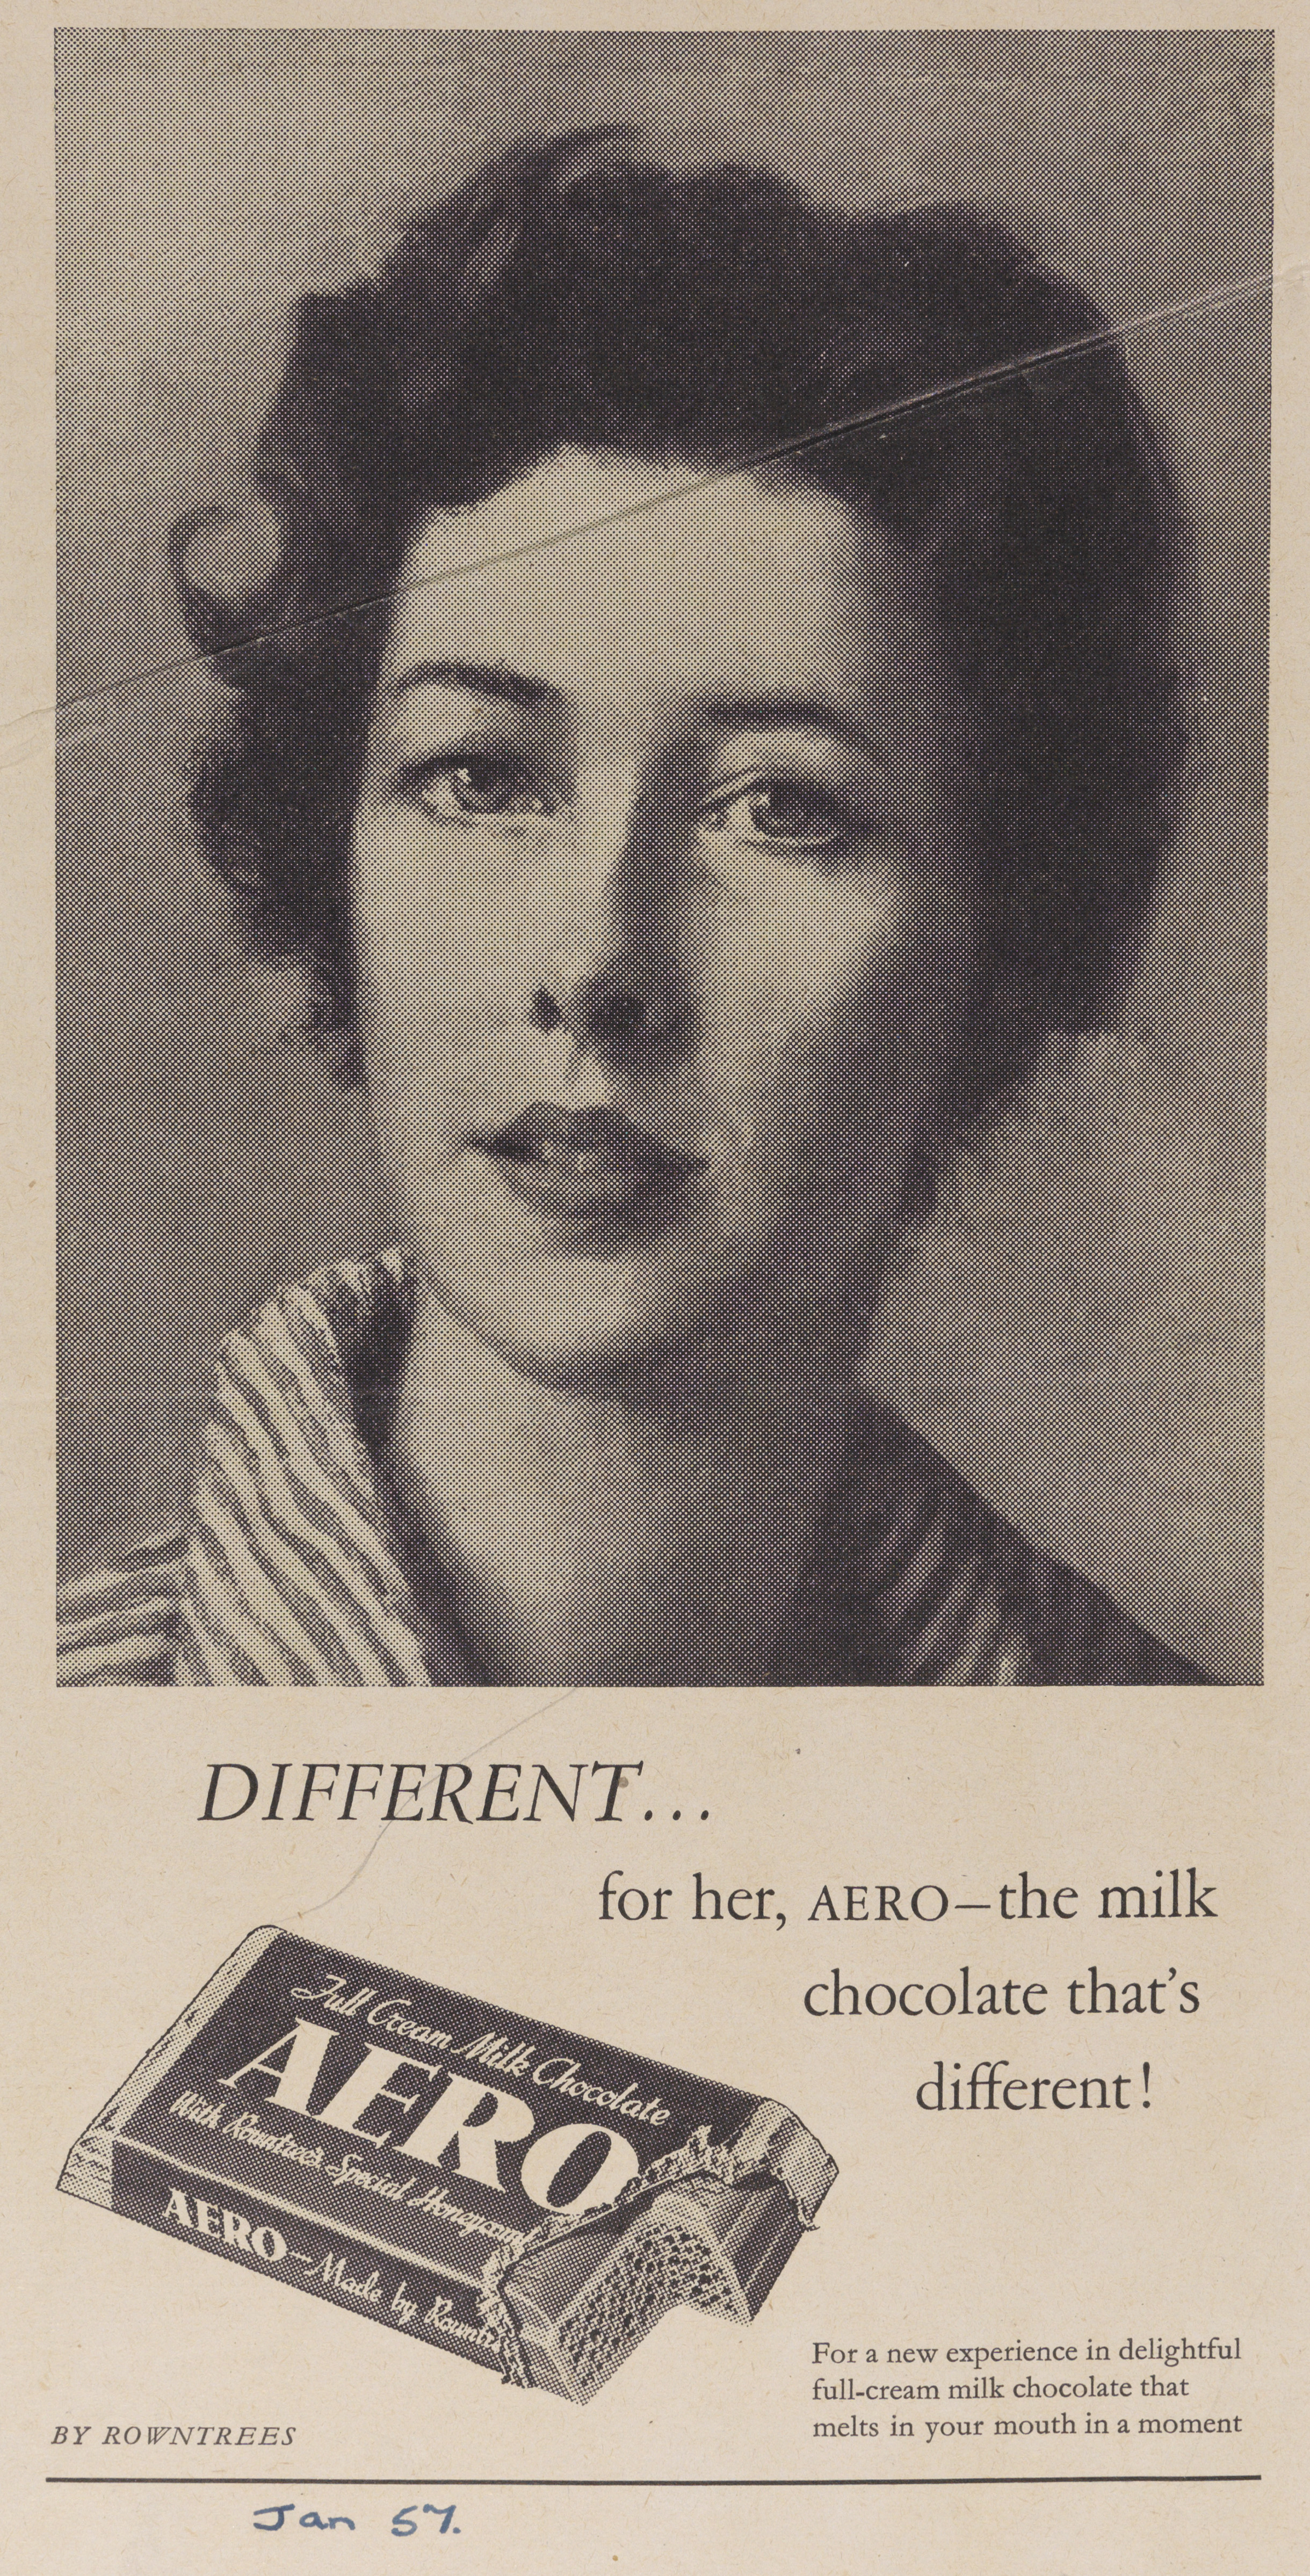 Image: Aero Advert 1957. With kind permission of Nestlé.